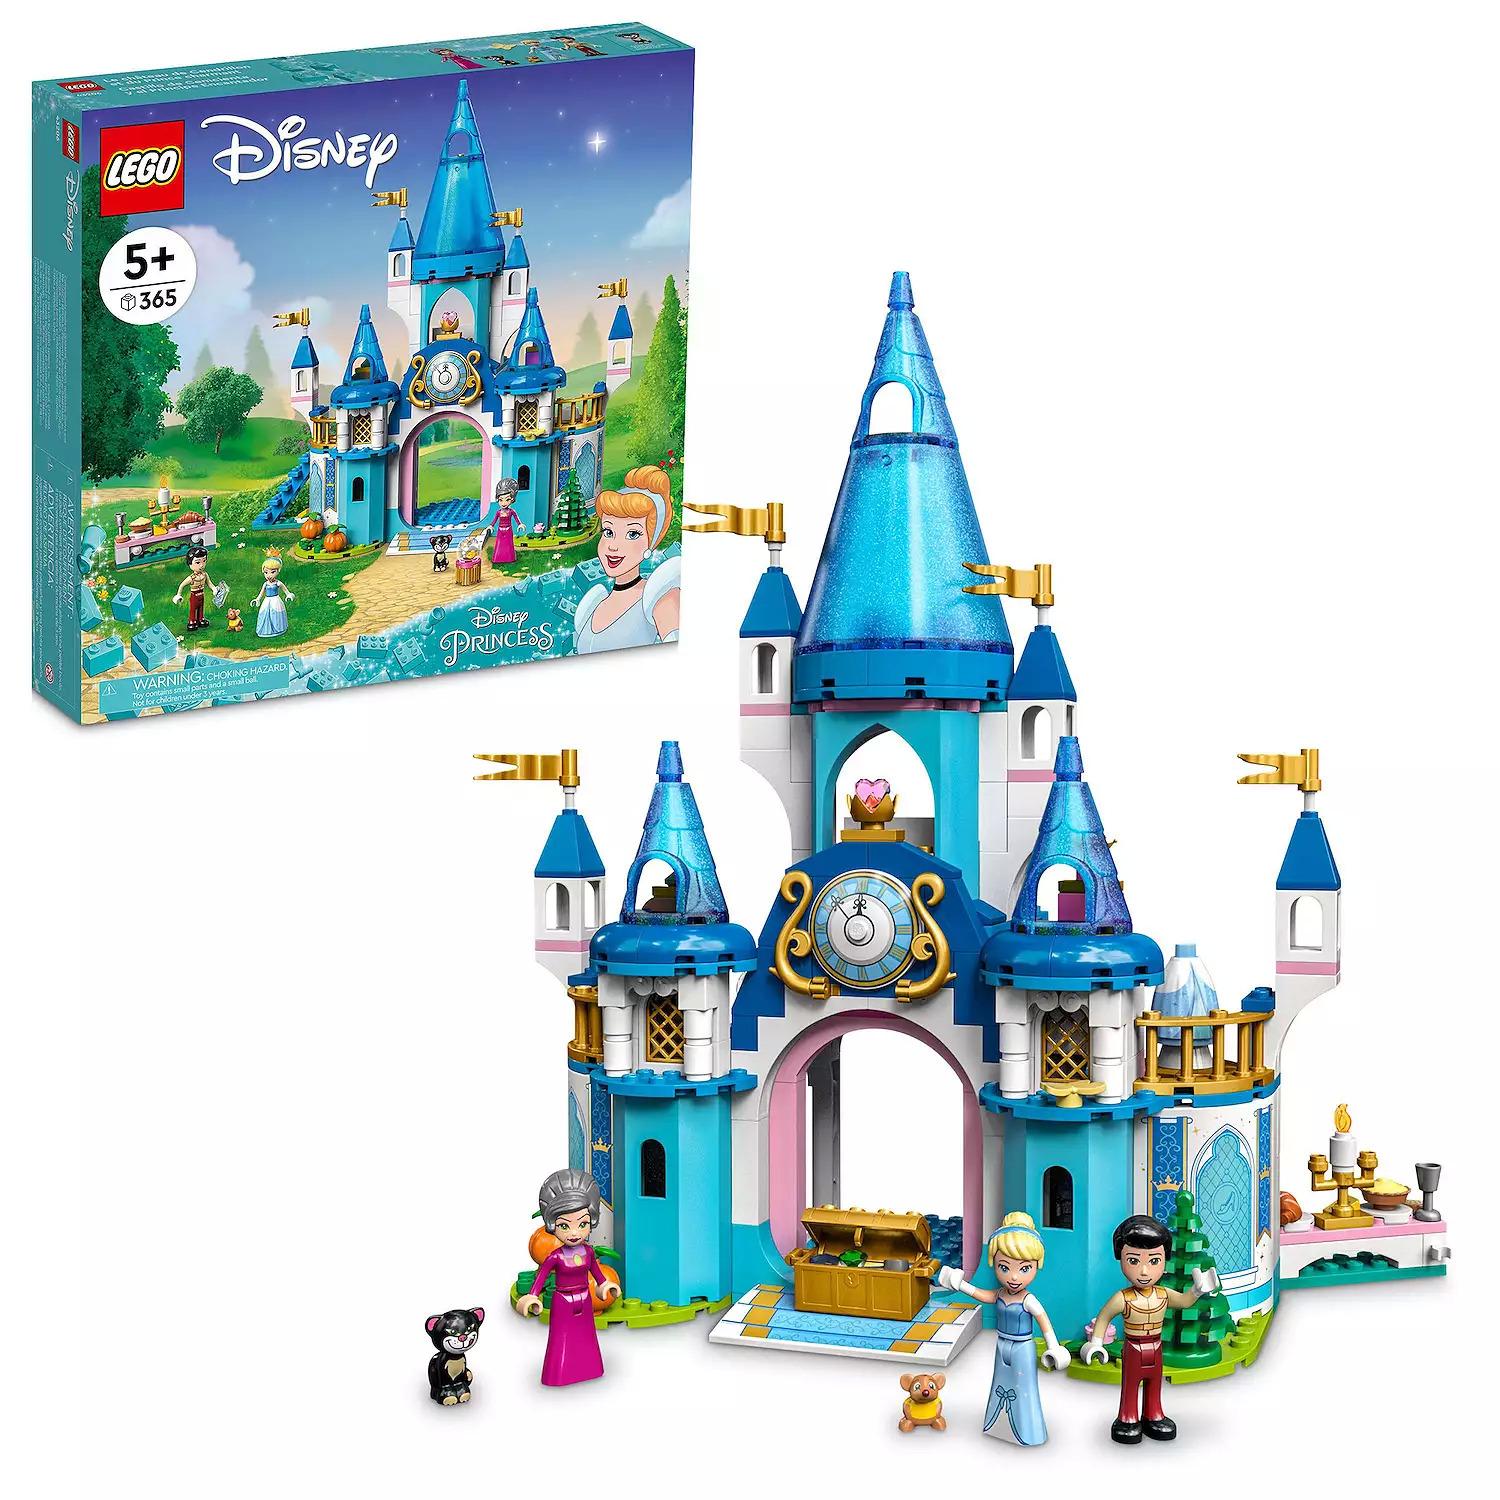 LEGO Disney Princess Cinderella Castle Building Set 43206 for $53.99 Shipped